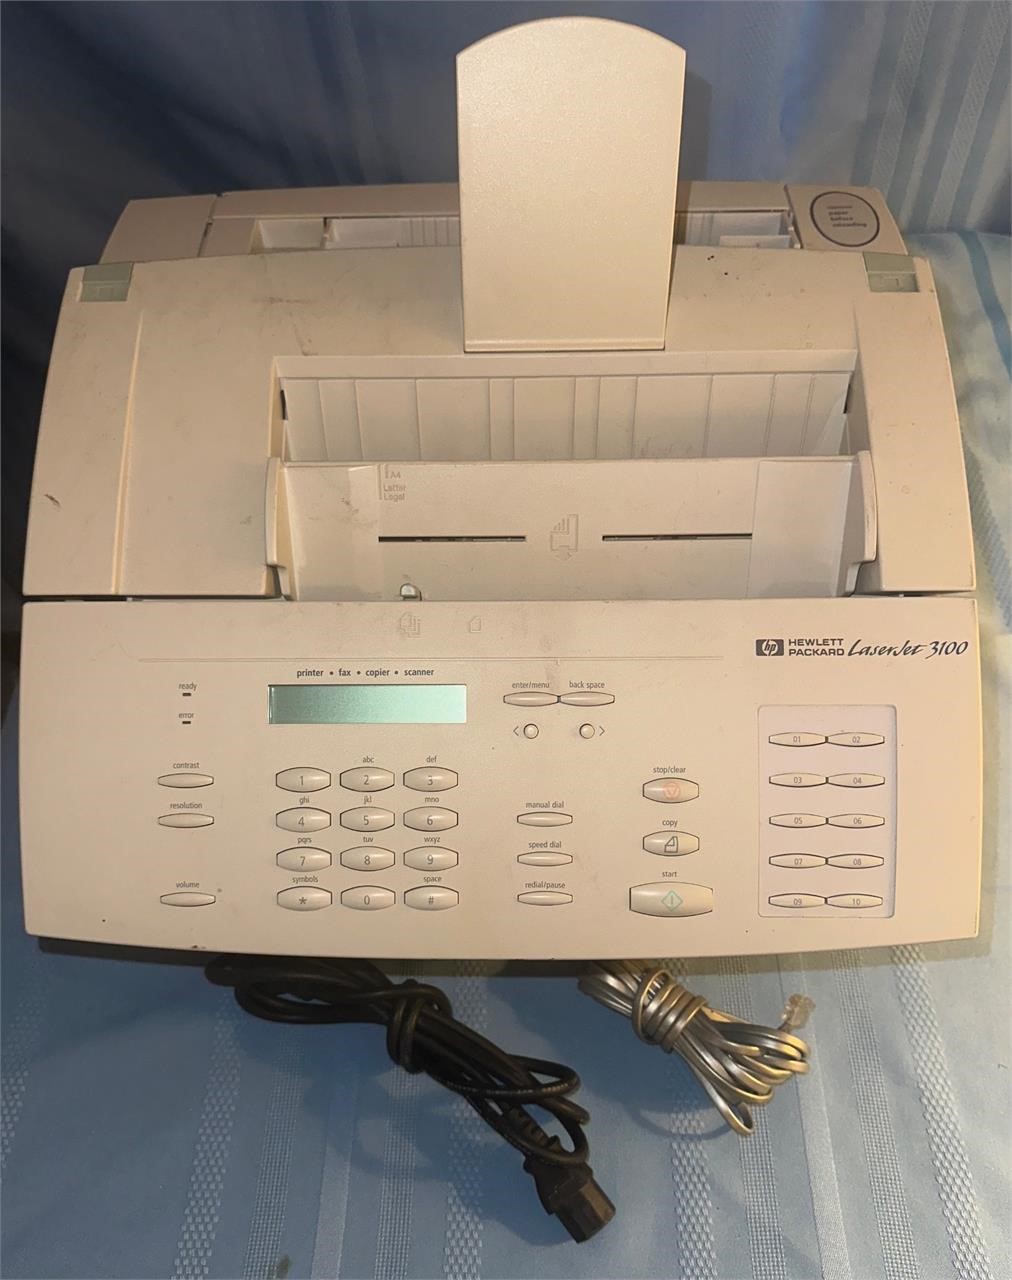 Hewlett Packard Laserjet 3100 Printer/Fax/Copier